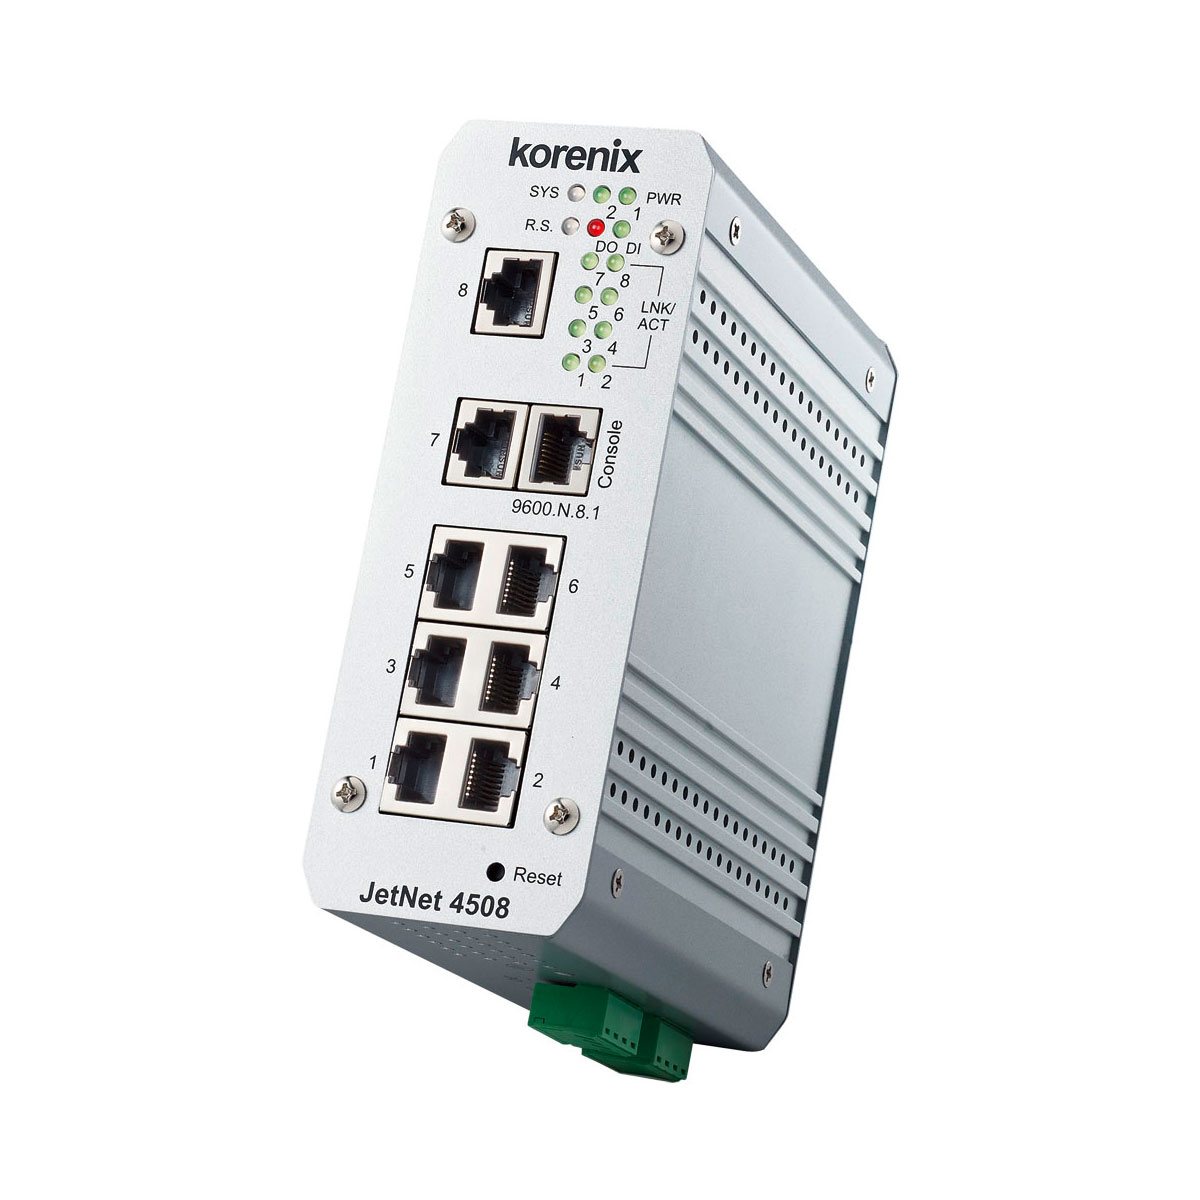 01-JetNet-4508-Ethernet-Switch c62c907b